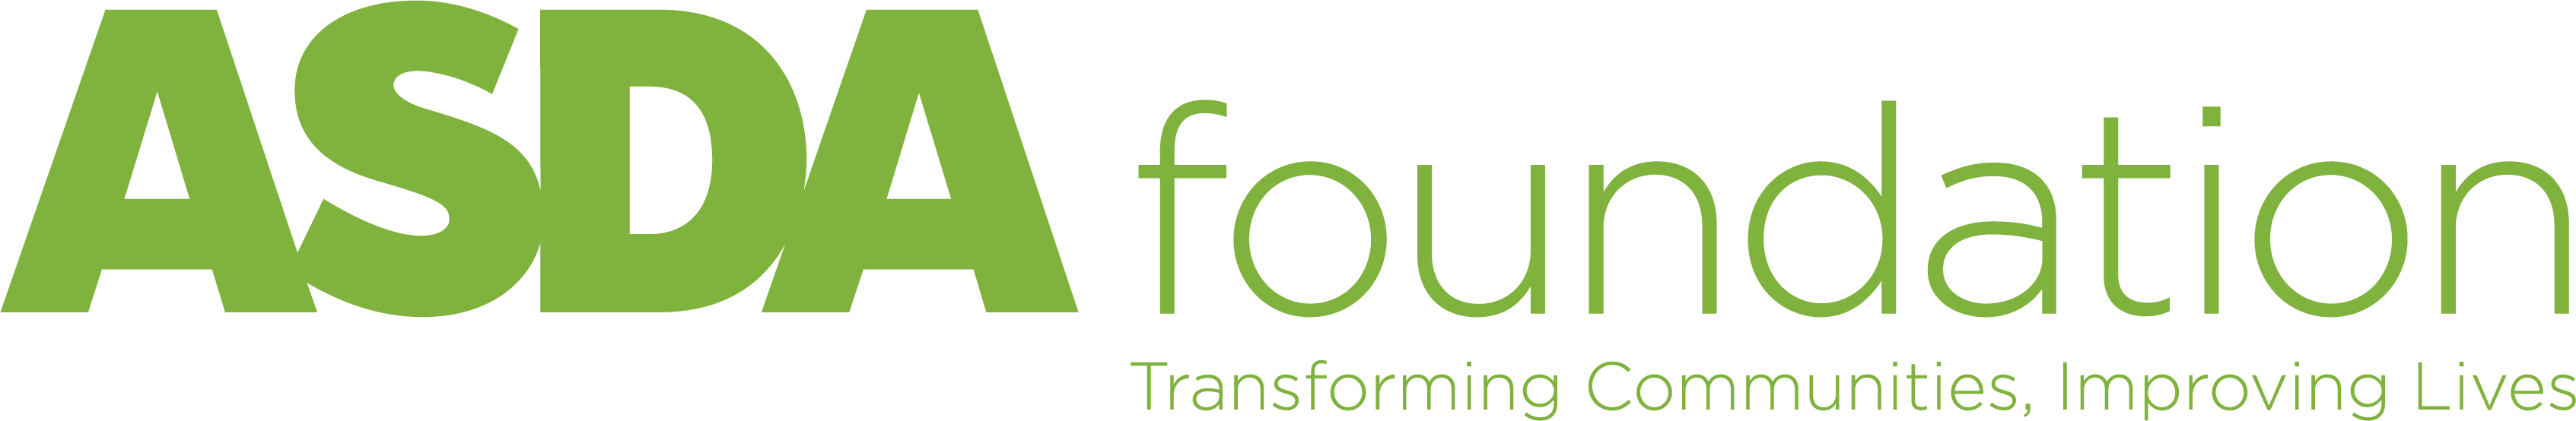 Asda_Foundation_Logo (1).png